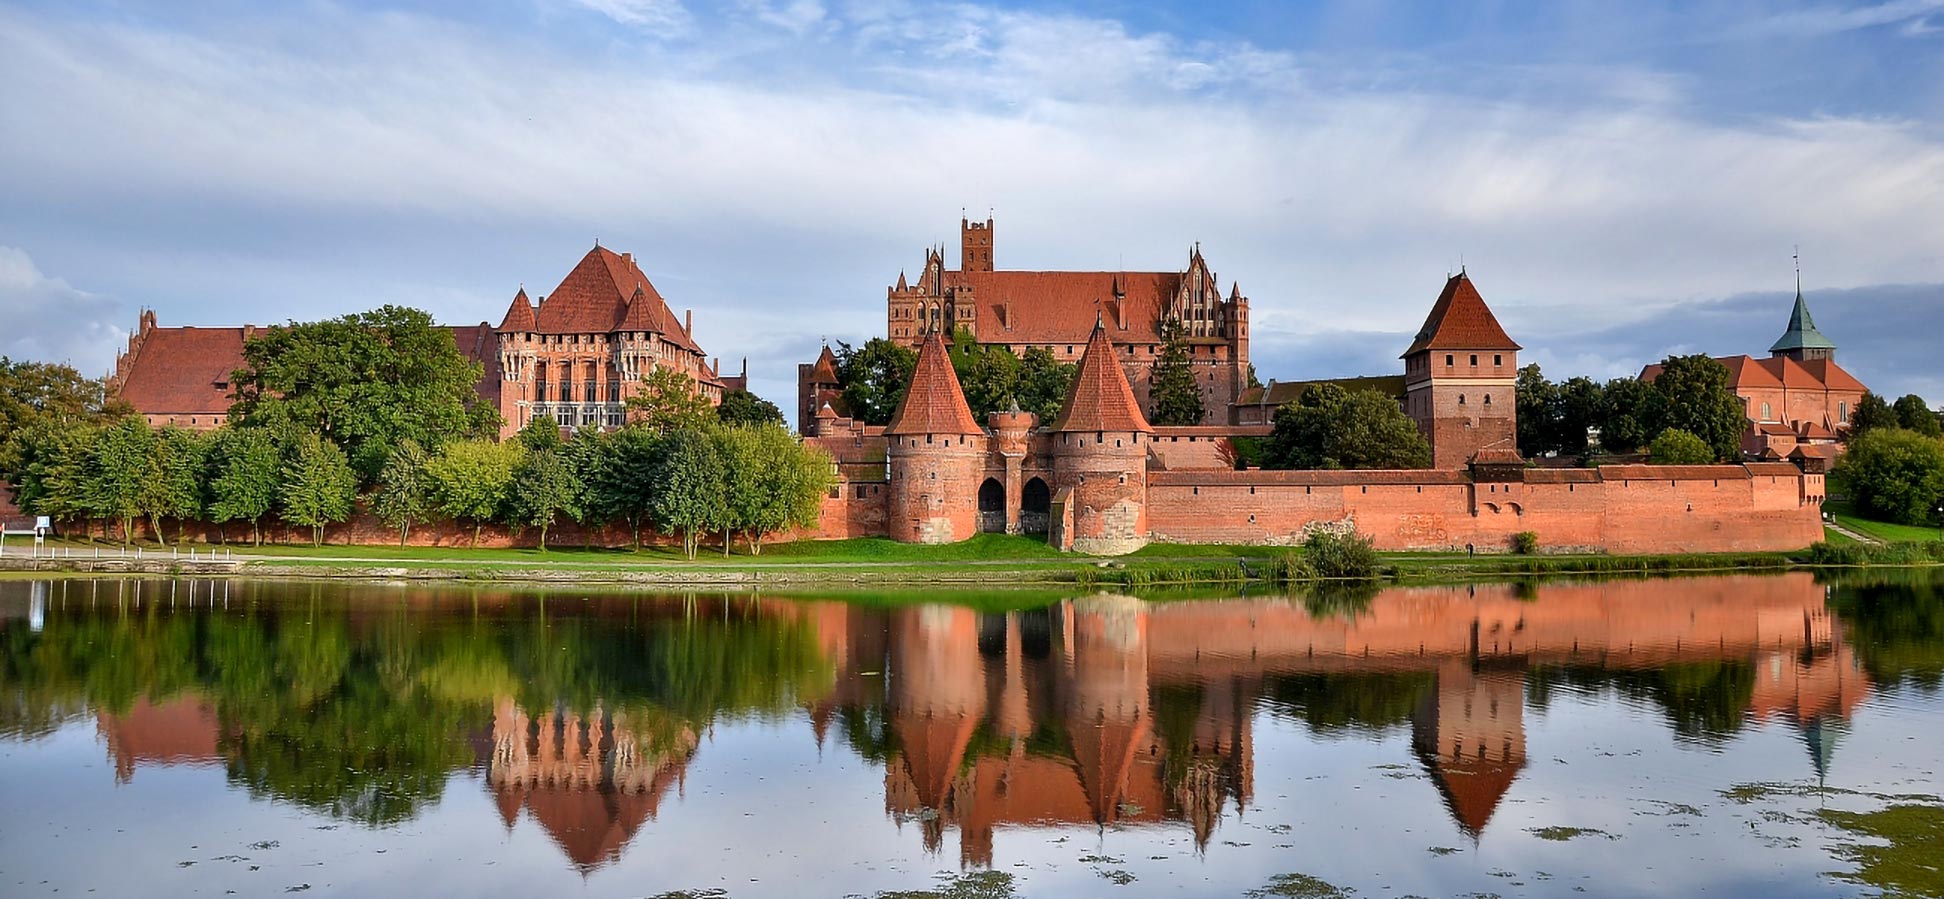 The Teutonic Order Castle in Malbork at Nogat River, Poland